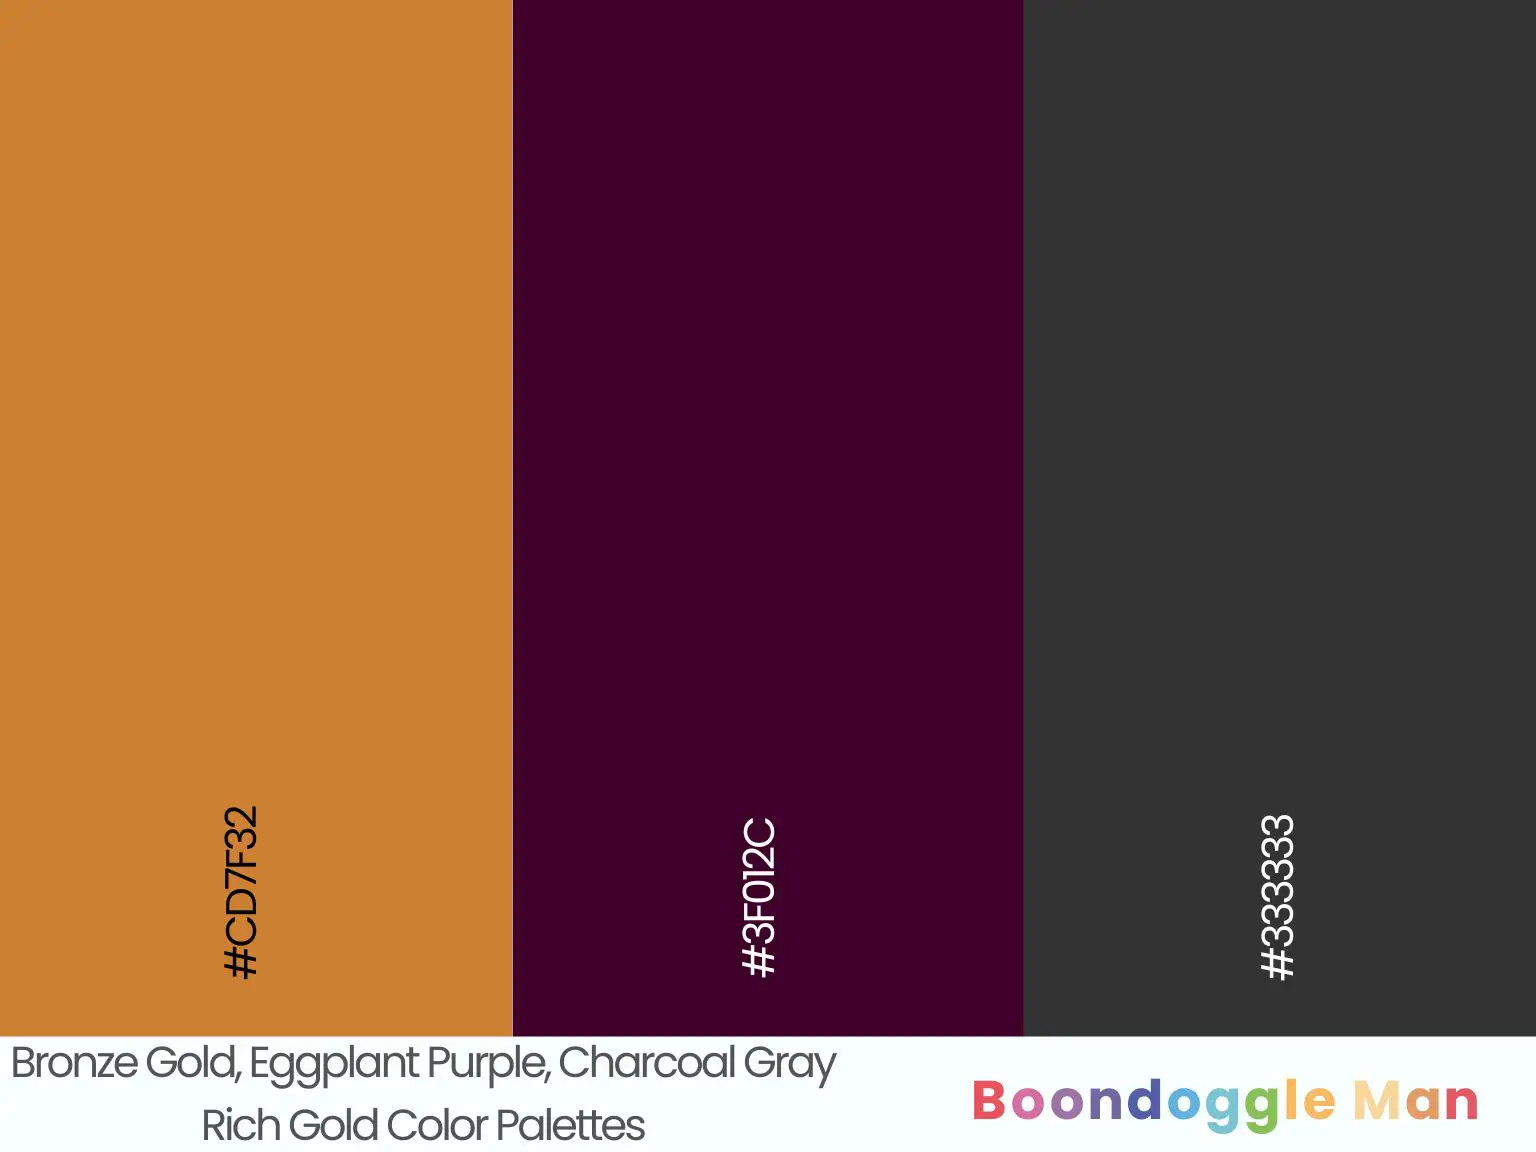 Bronze Gold, Eggplant Purple, Charcoal Gray